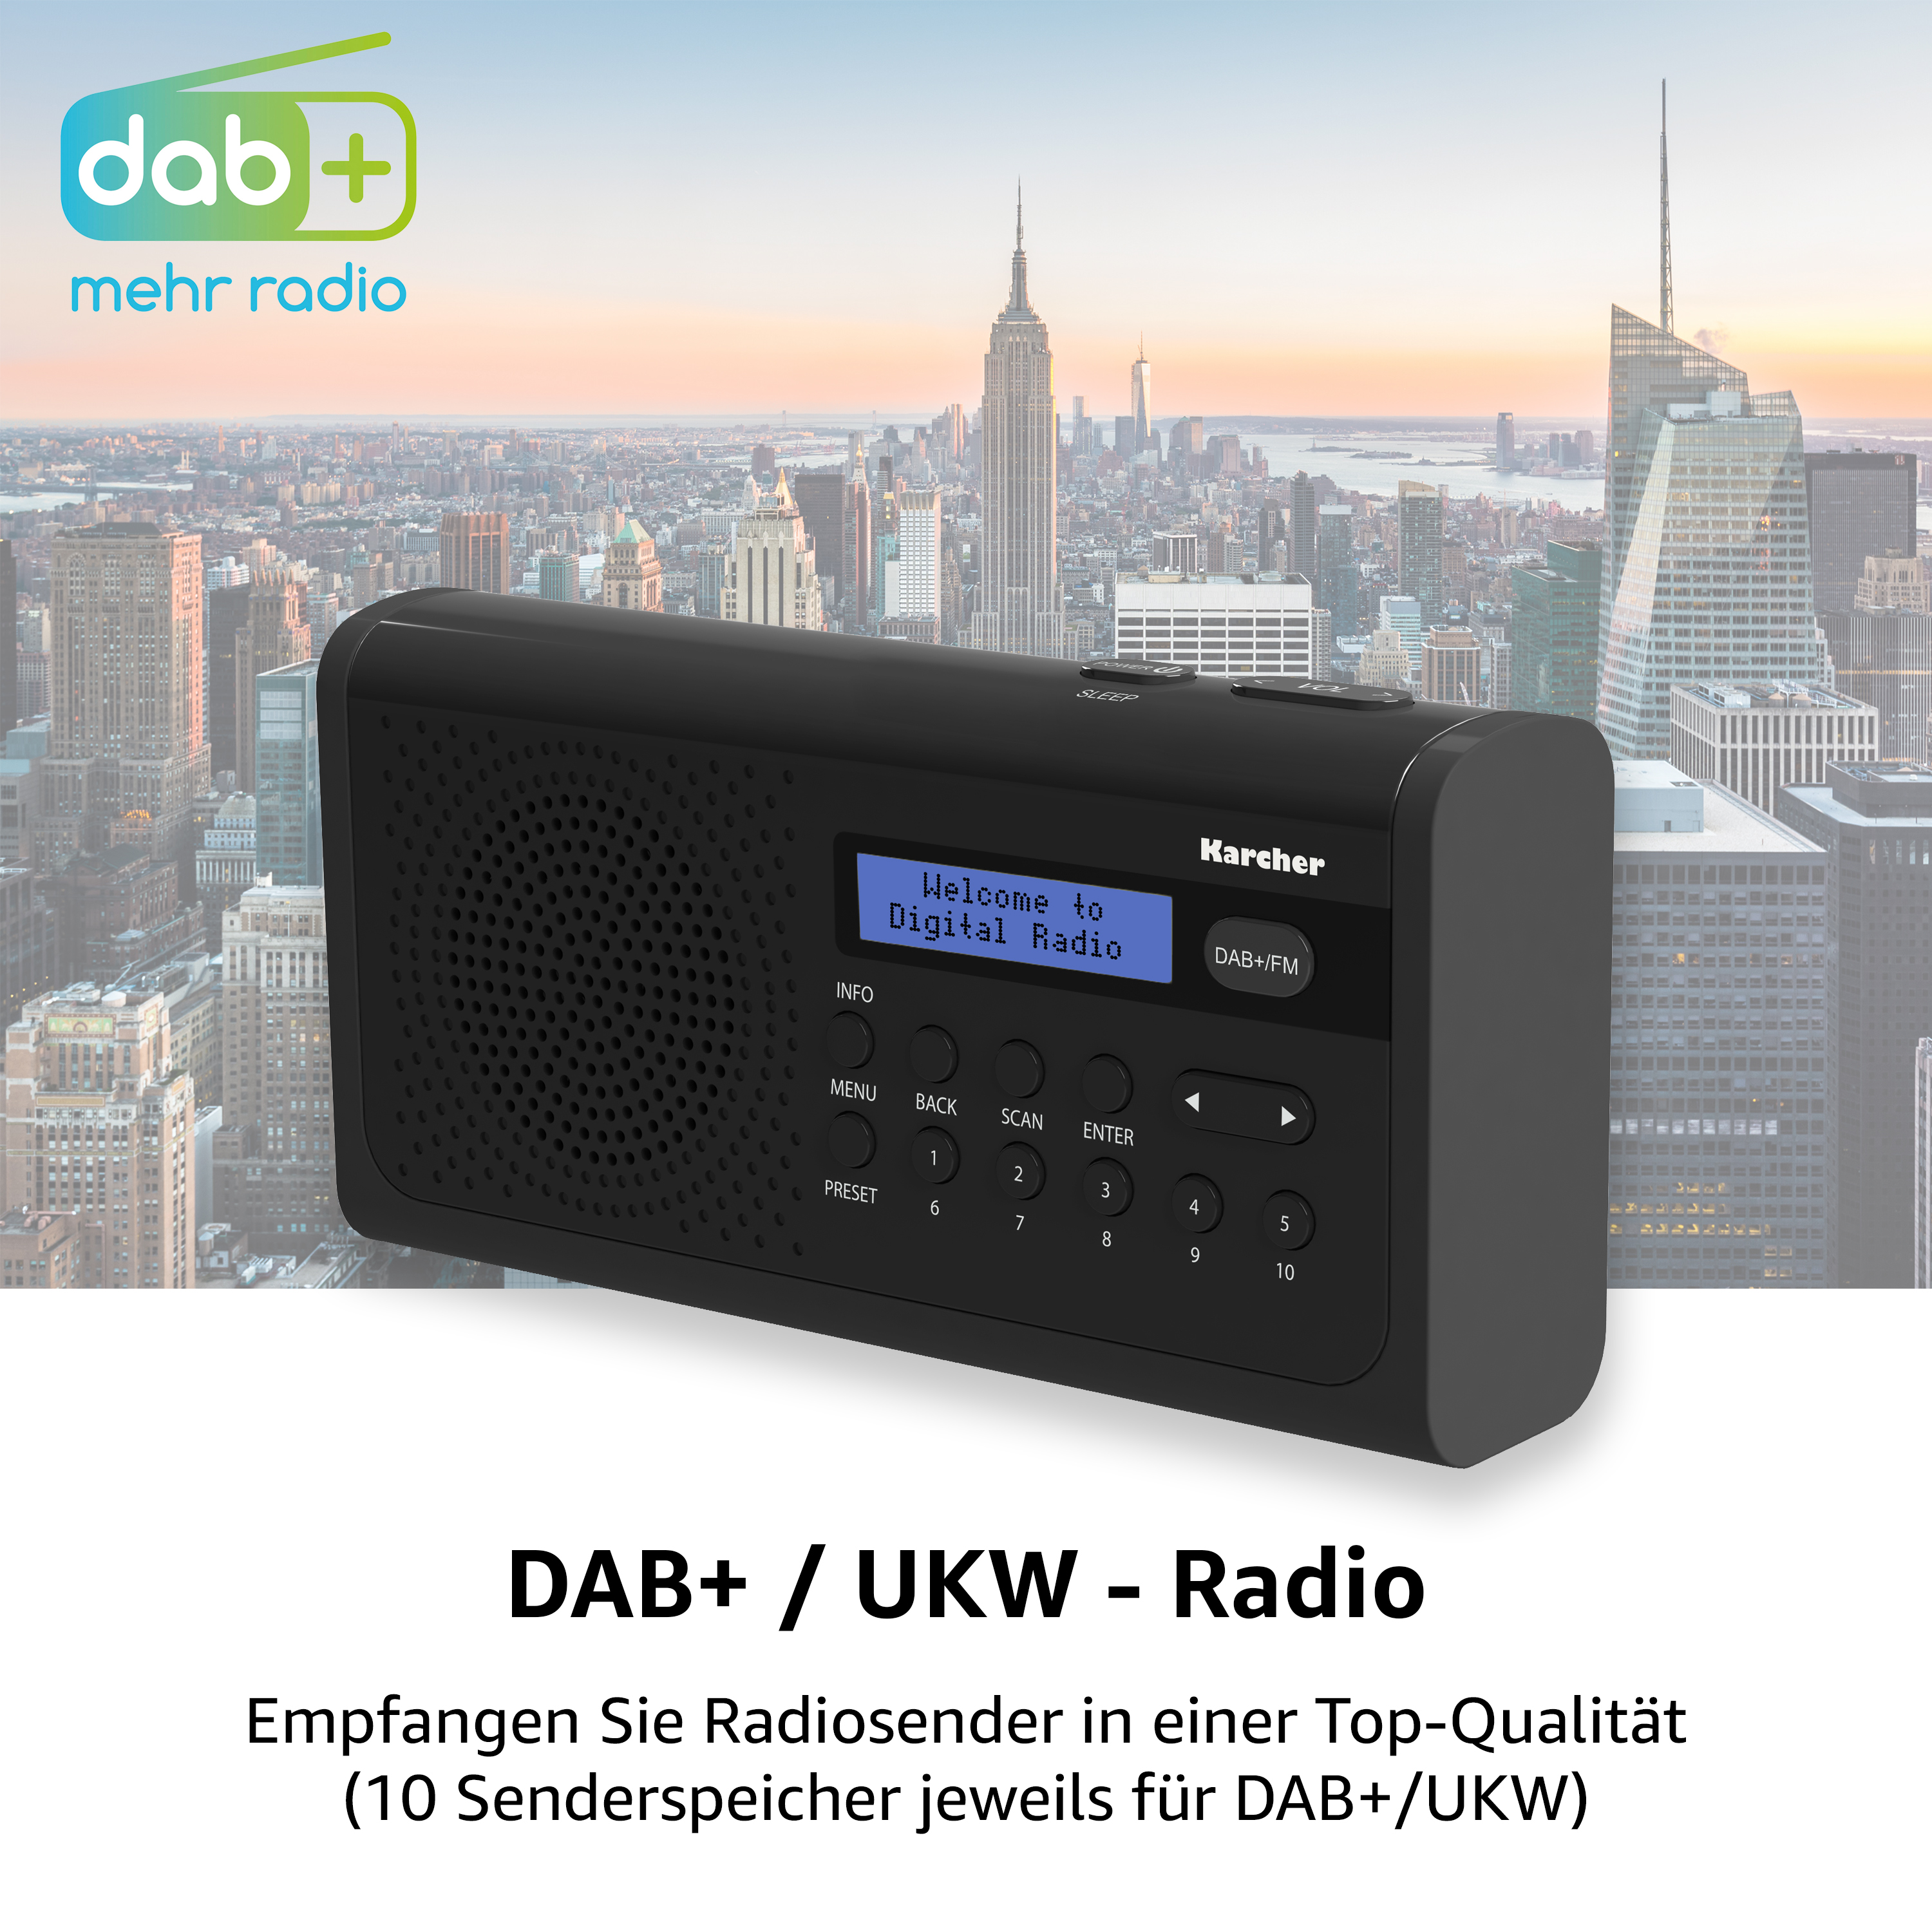 FM, Schwarz DAB 2405 DAB+, DAB+ Radio, DAB+, KARCHER